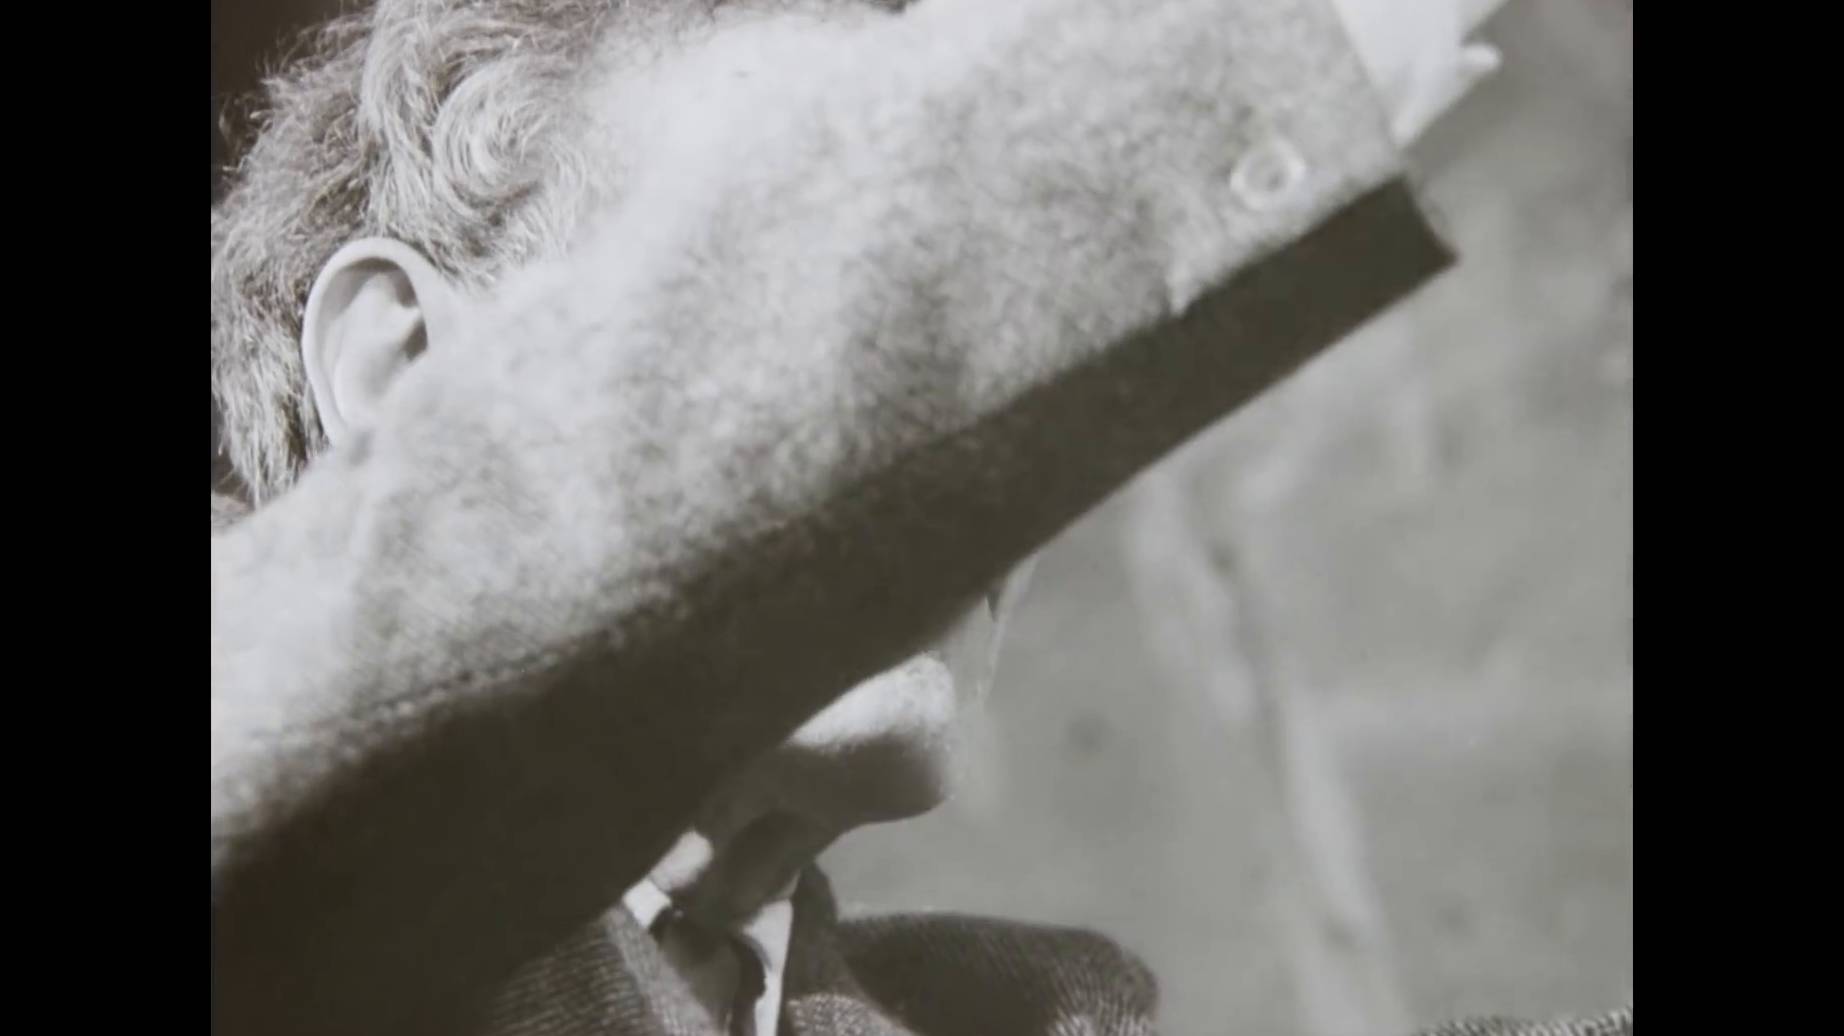 Thumbnail capture of Giacometti